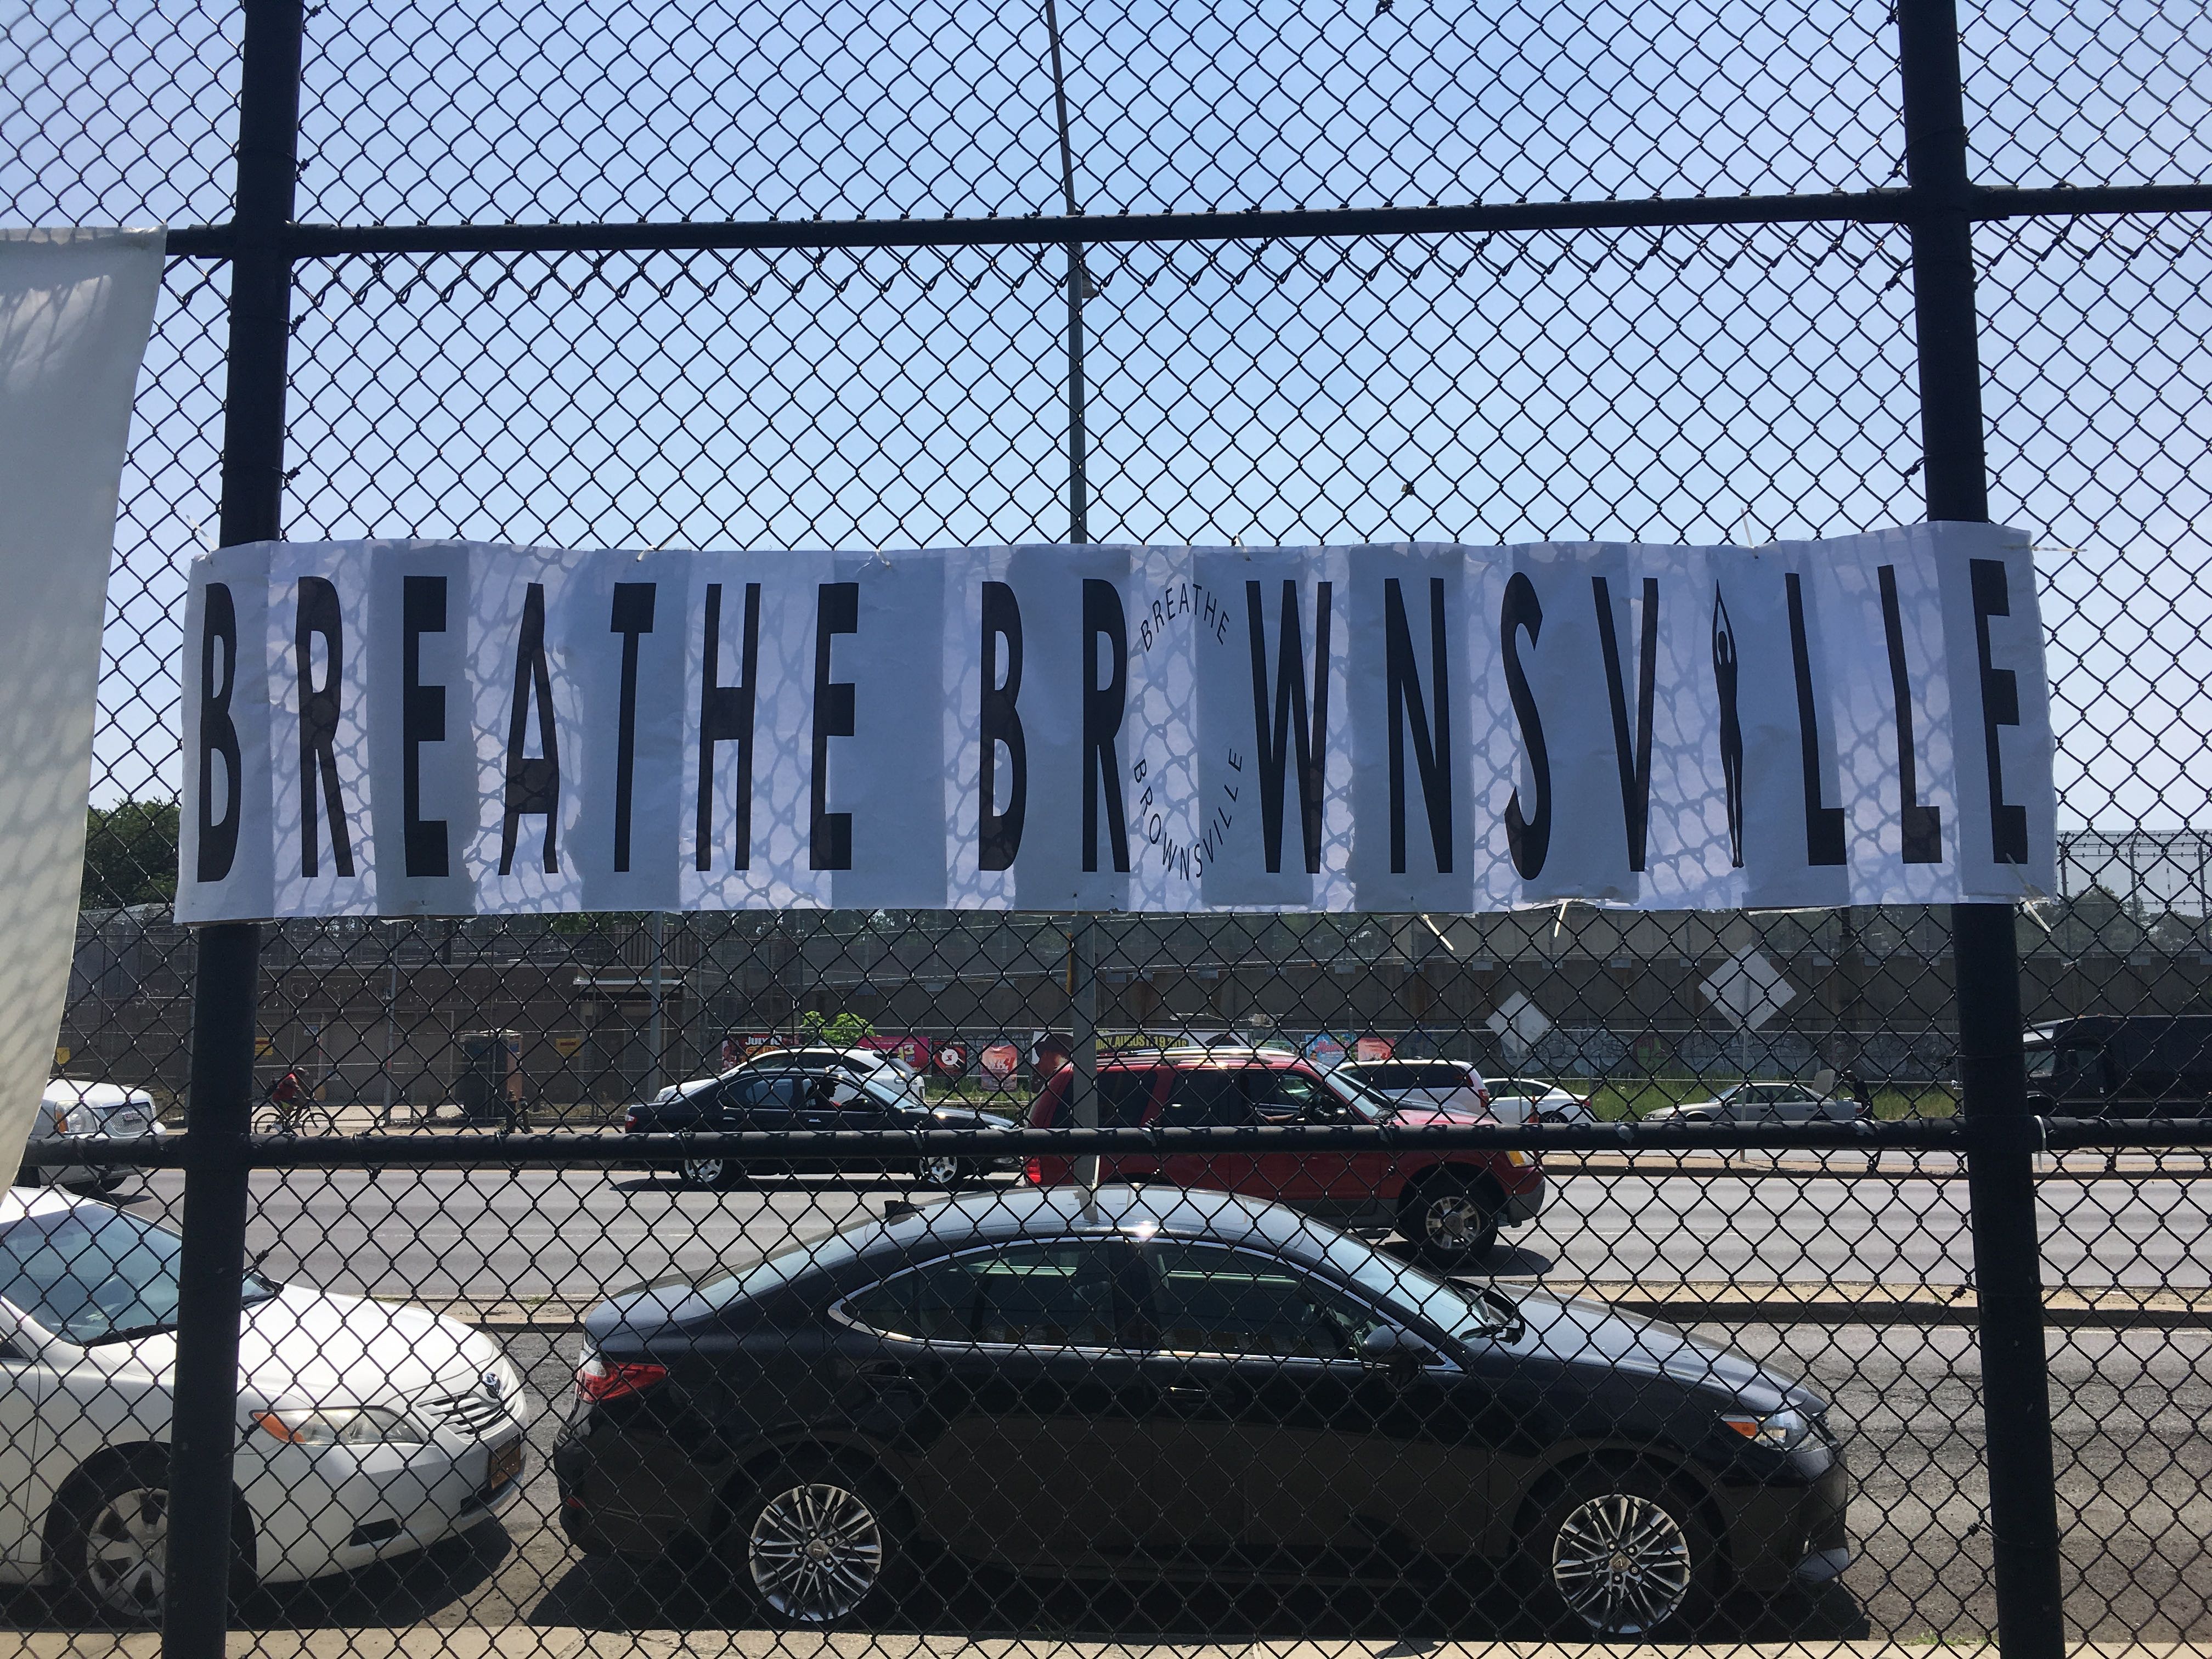 Breathe Brownsville Yoga Festival - Brownsville Brooklyn